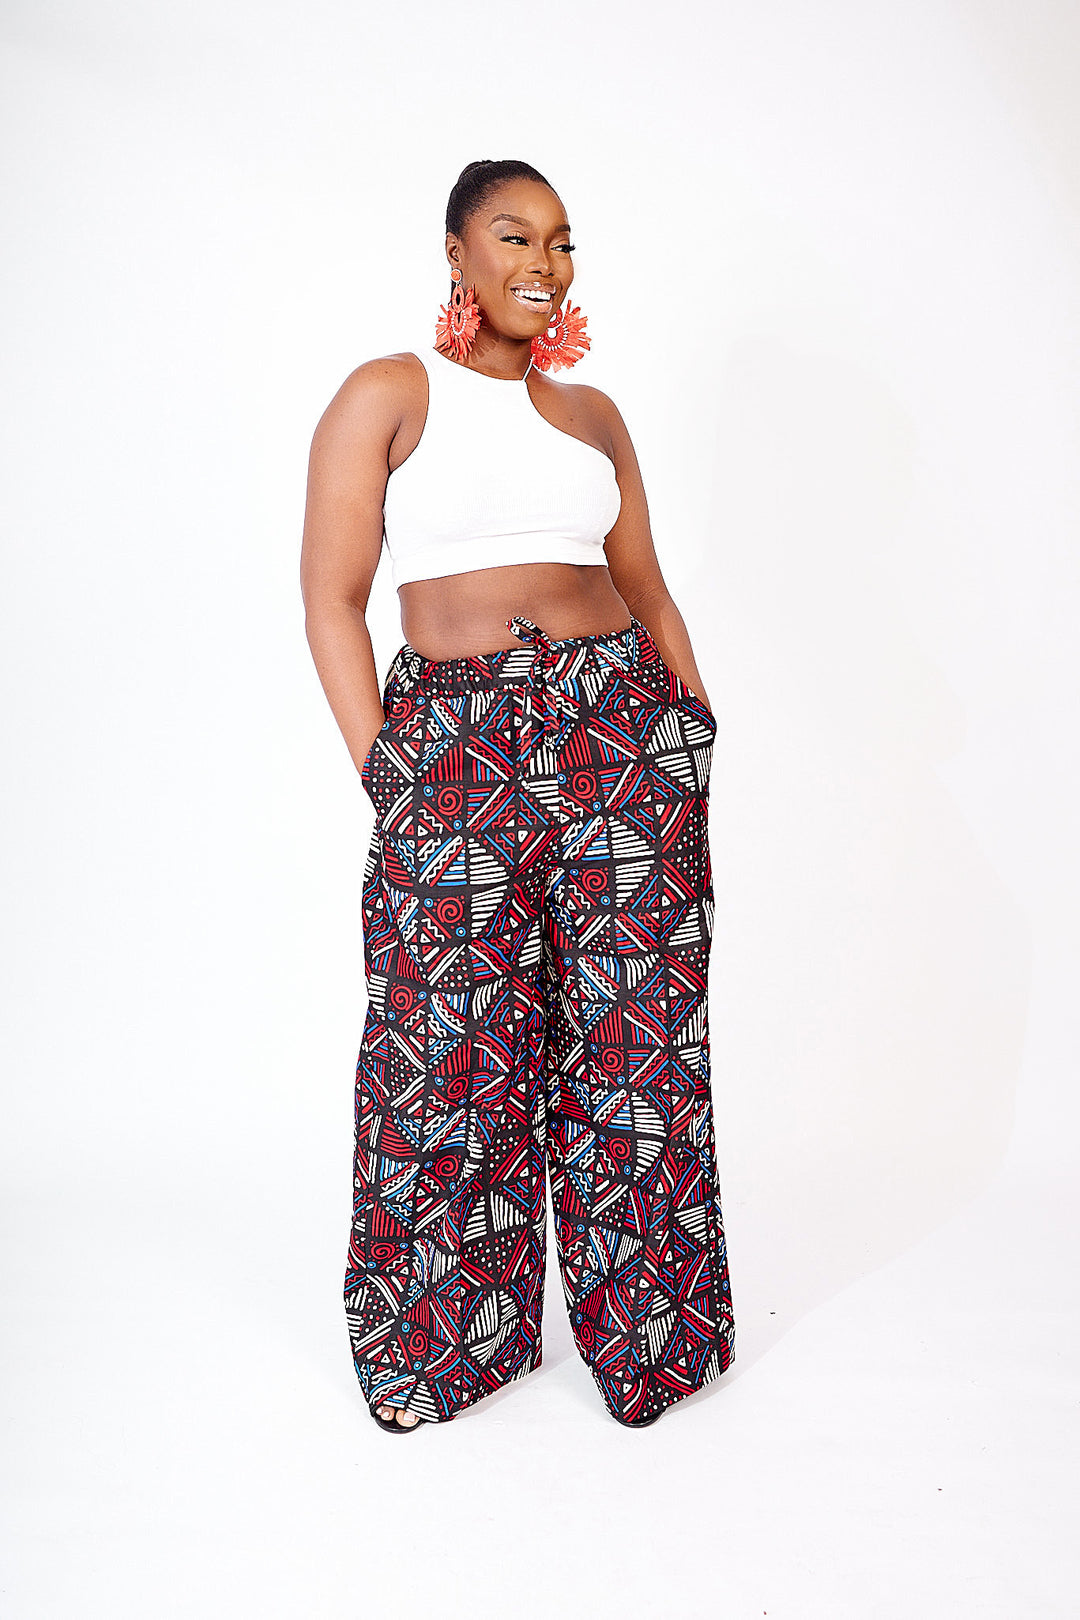 Subomi African print Pants 